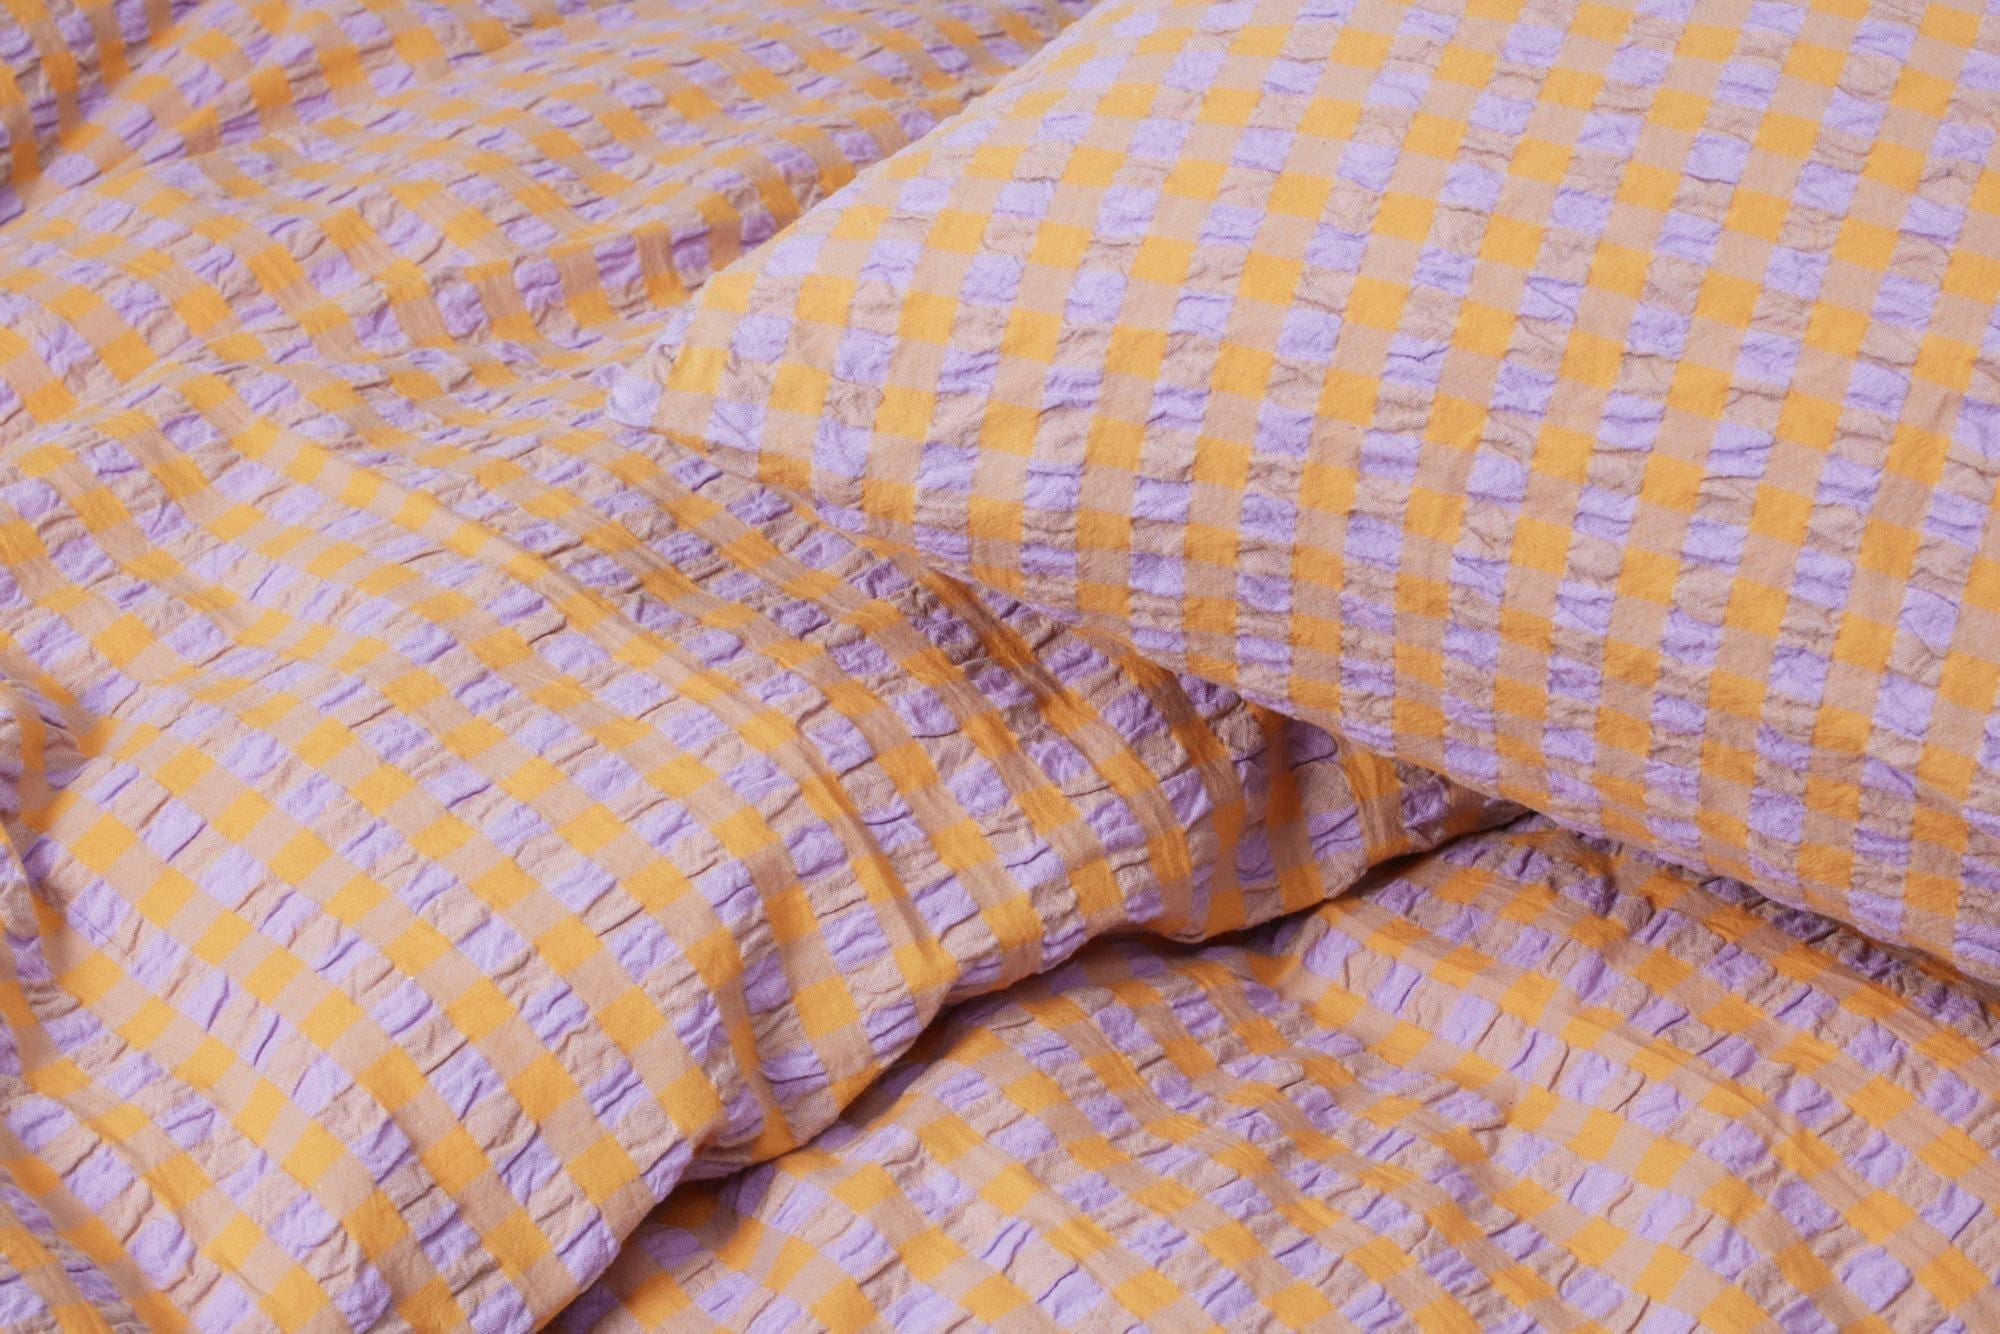 Juna Bæk & Bølge bed linnen 140x220 cm, lavendel blauw/perzik